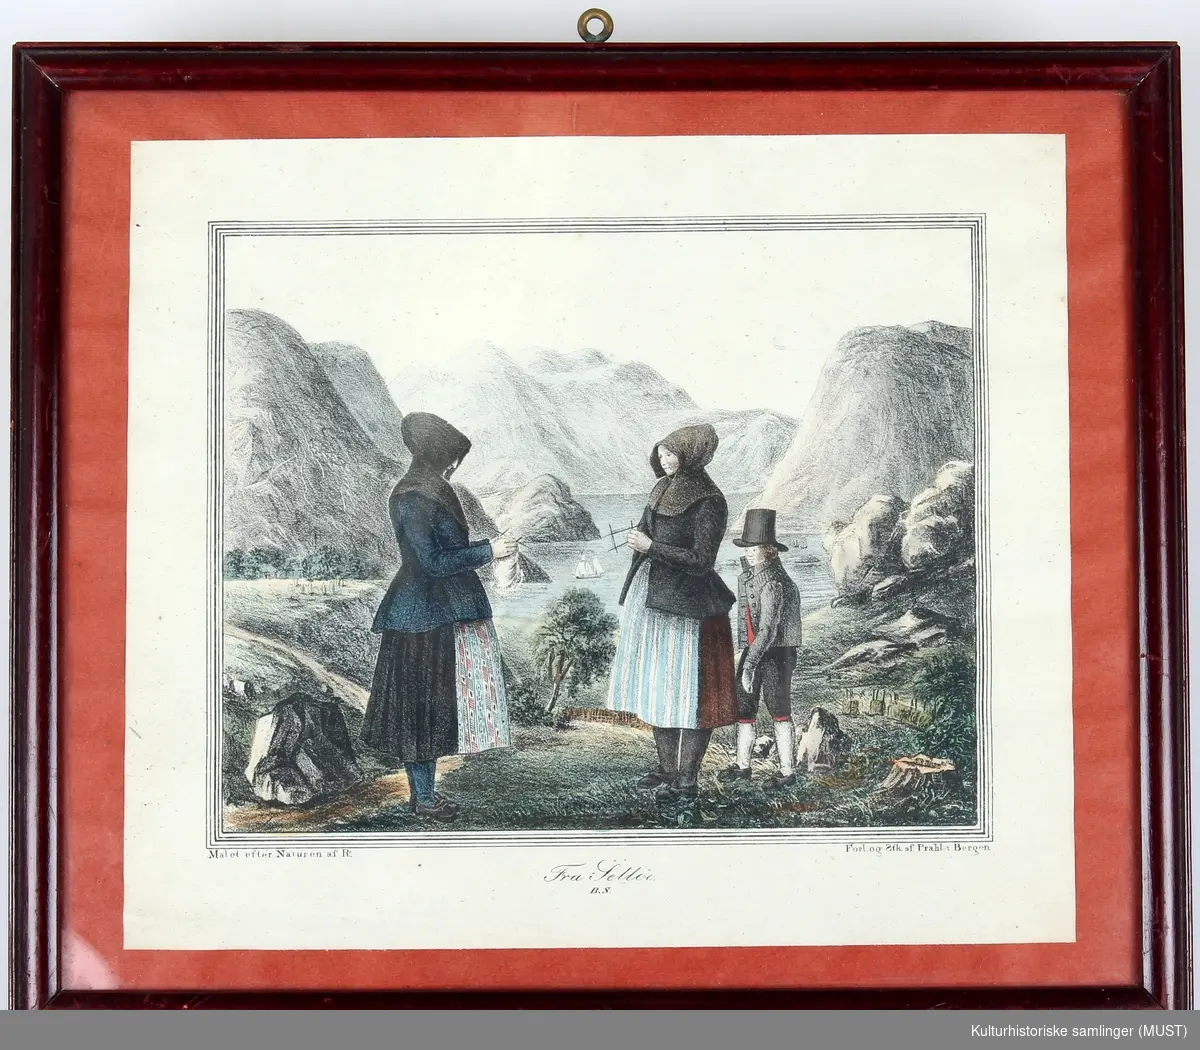 To strikkende kvinner og en gutt. Omgivelser og natur fra øya Selja i Nordfjord.